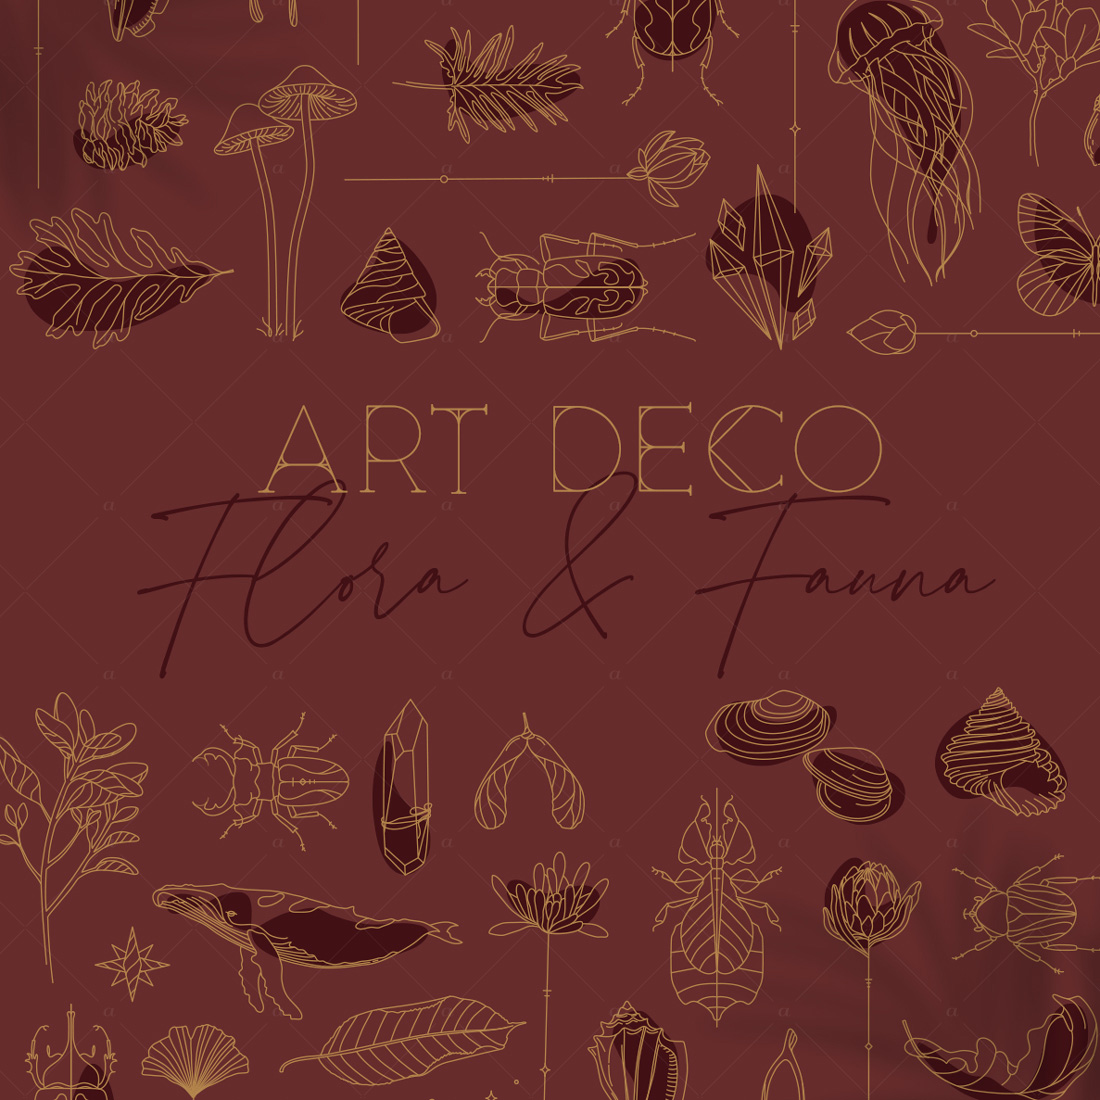 Art Deco Flora & Fauna cover image.